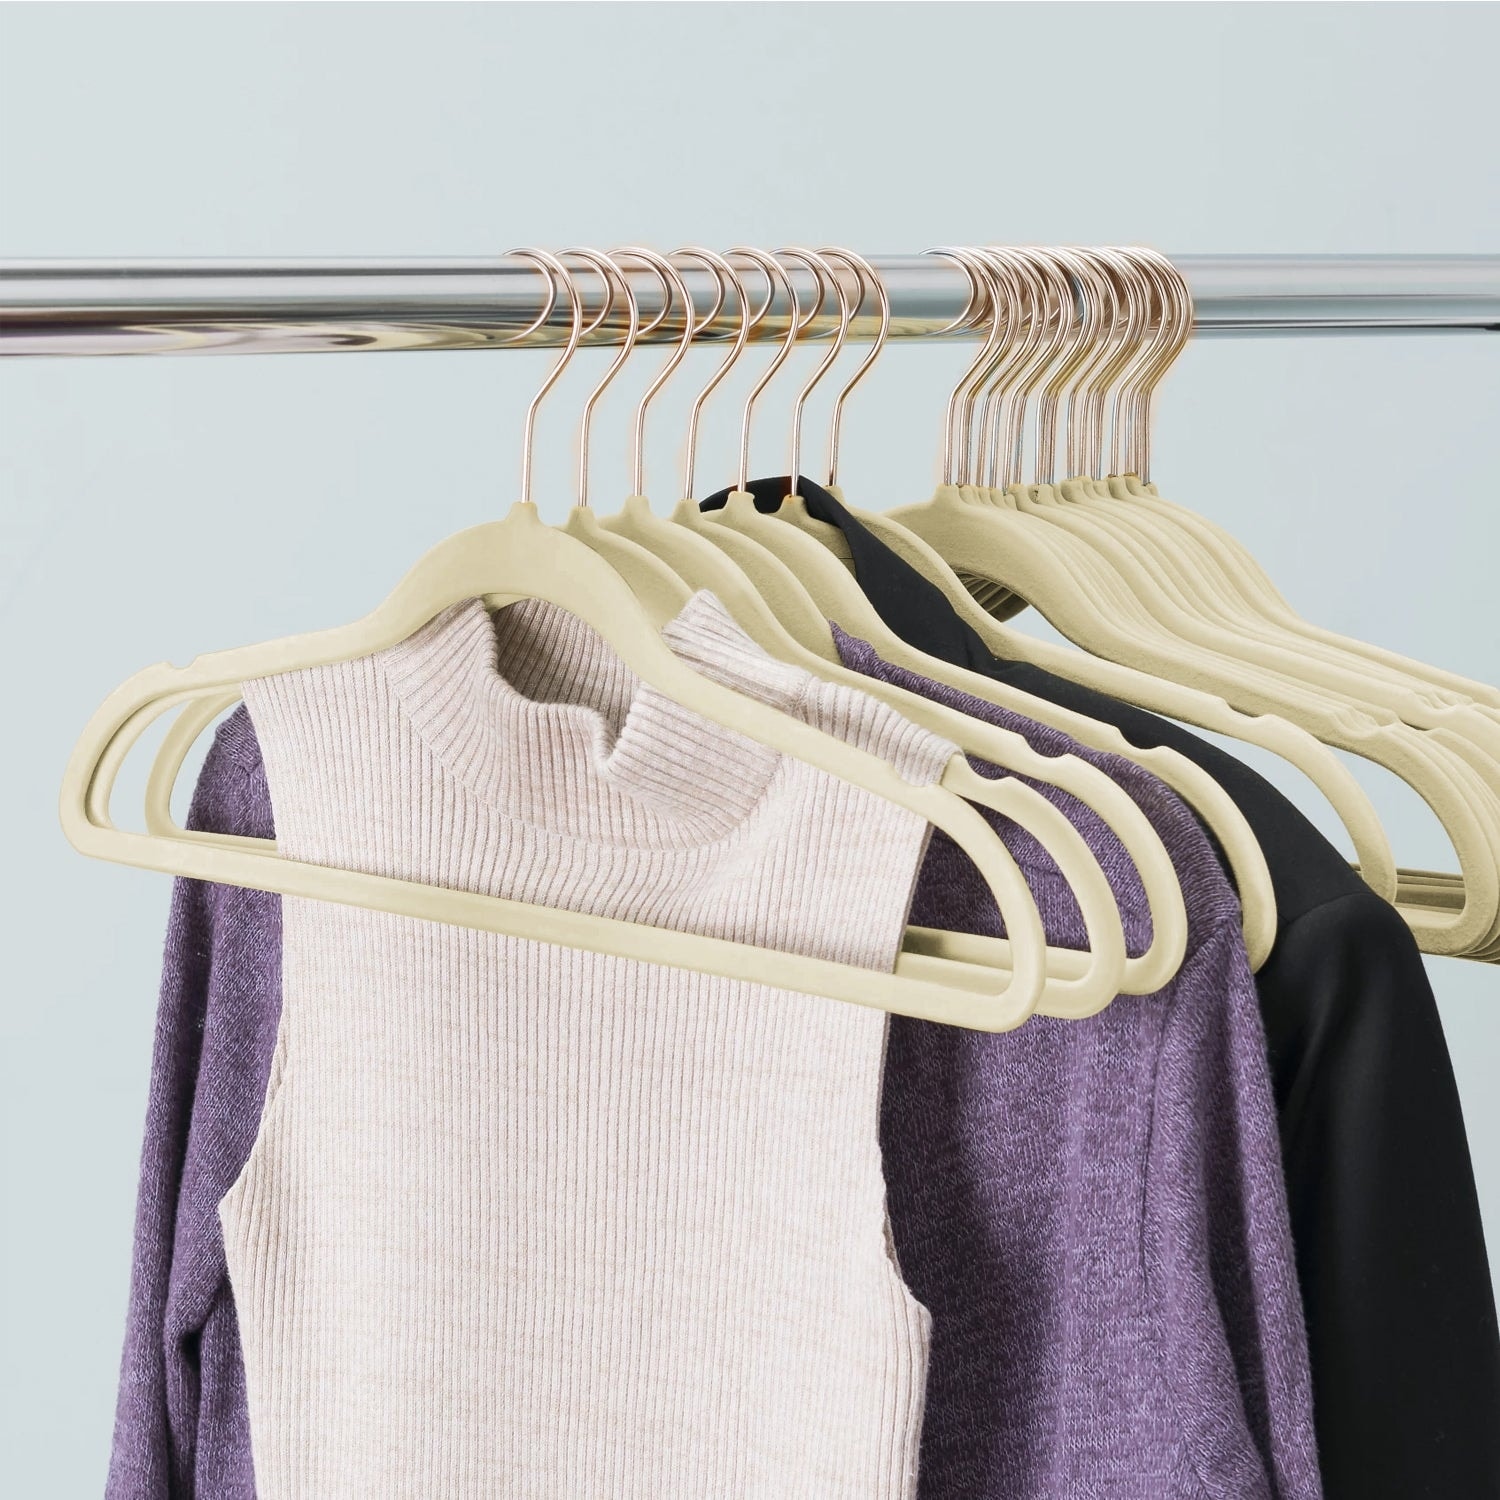 Mainstays Clothing Hangers, 3 Pack, White, Durable Plastic, Swivel Neck,  Pant 